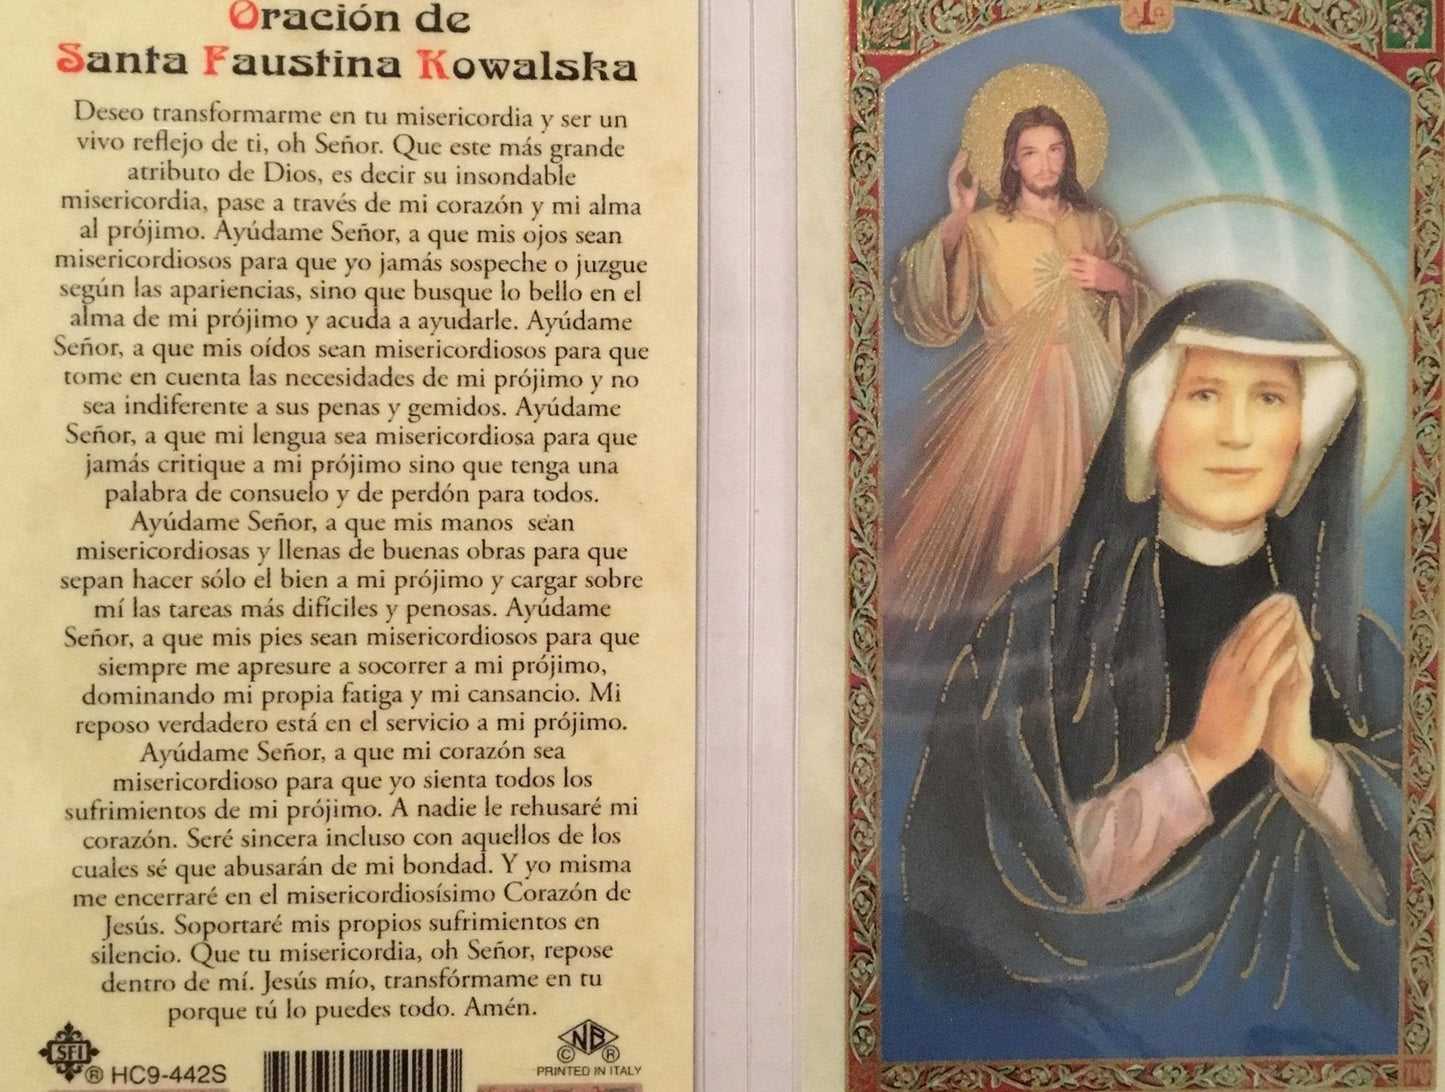 Prayer Card Oracion De Santa Faustina Kowalska SPANISH Laminated HC9-442S - Ysleta Mission Gift Shop- VOTED El Paso's Best Gift Shop